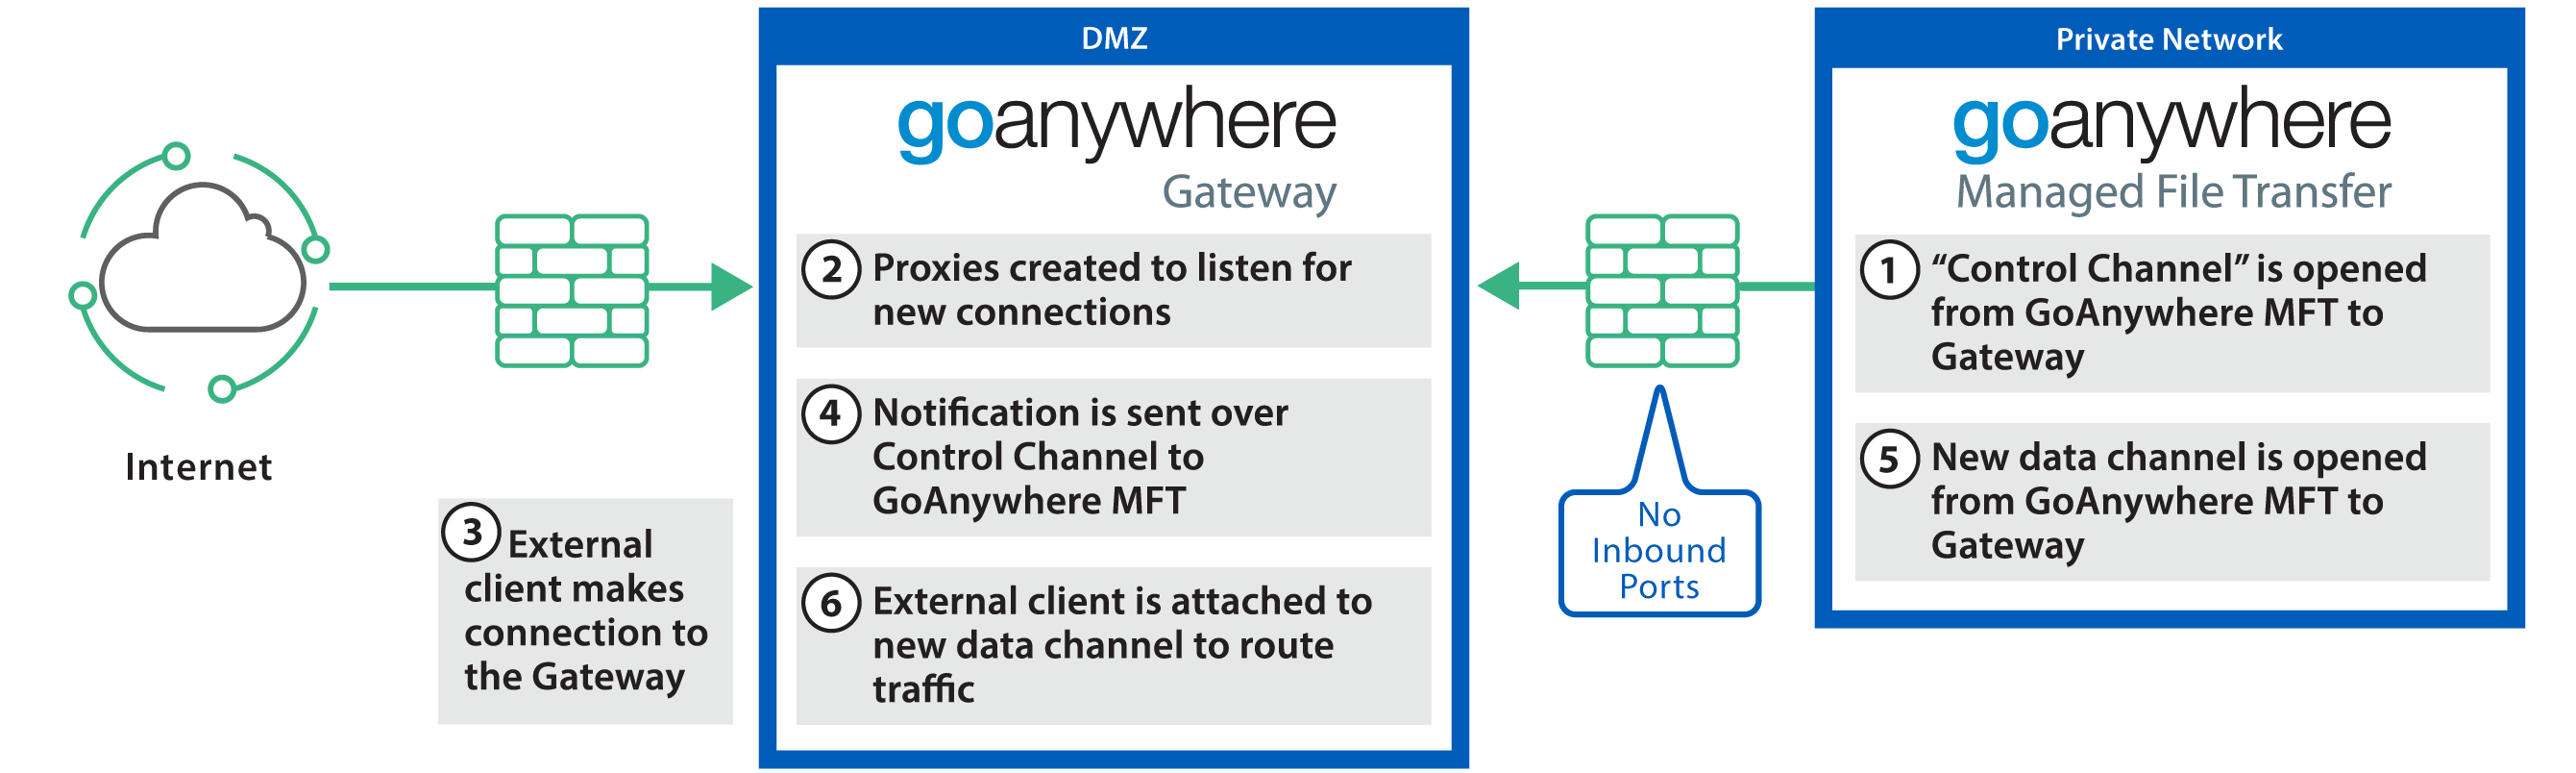 DMZ Gateway explained